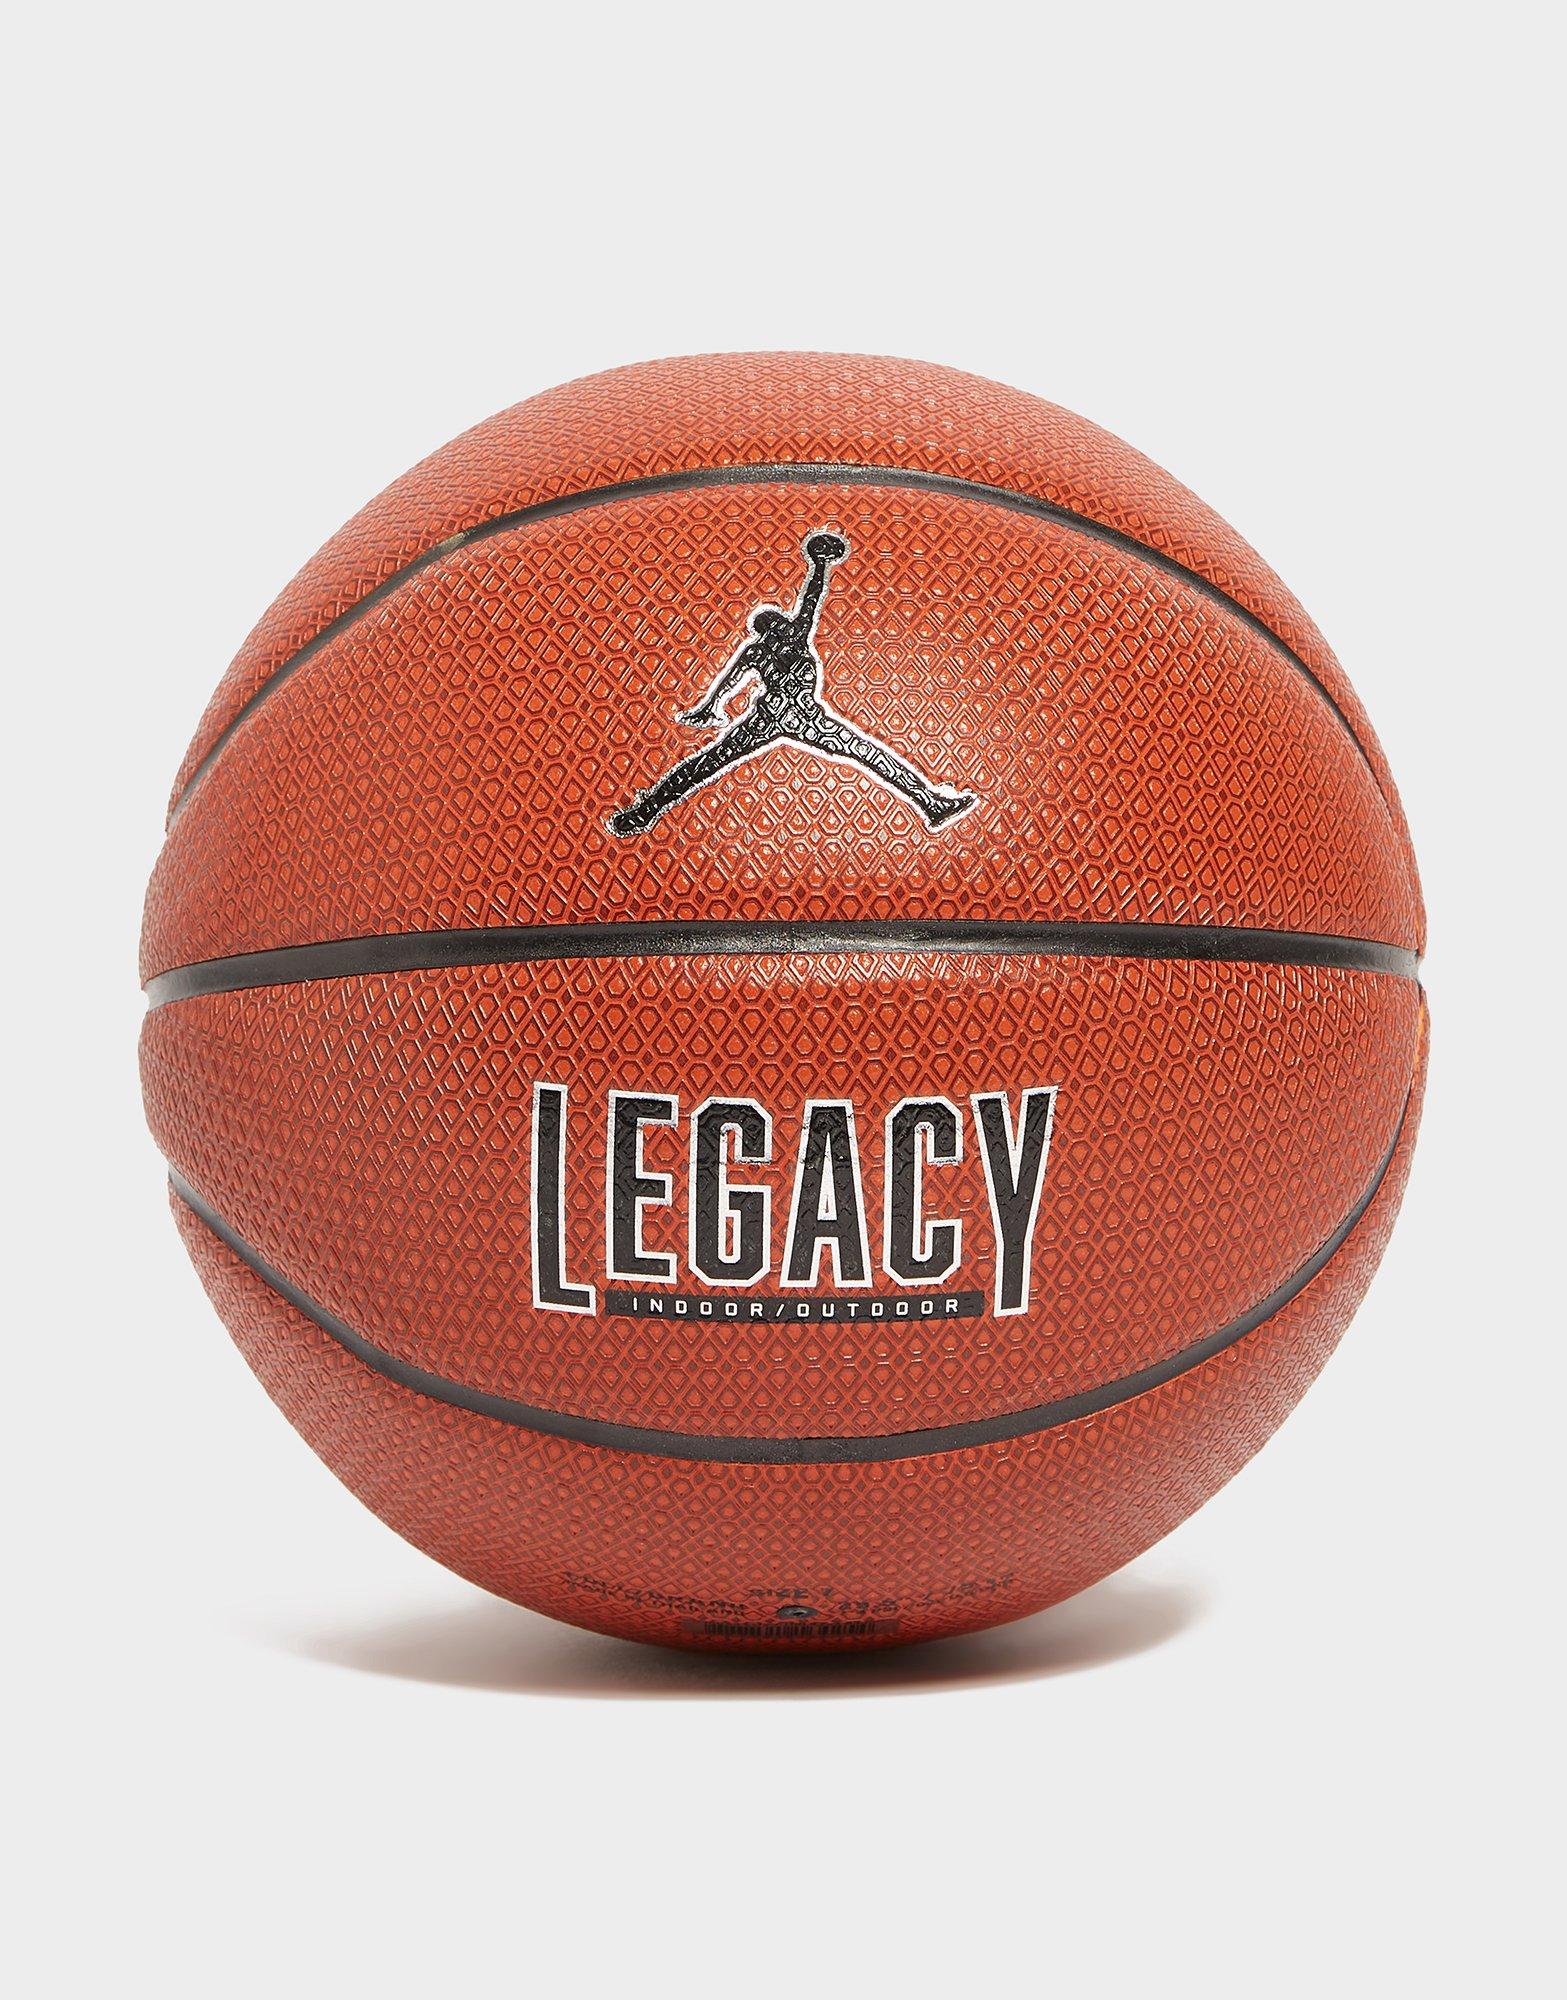 Bola De Basquete Nike Jordan Legacy 8p Tamanho 7 - Marrom